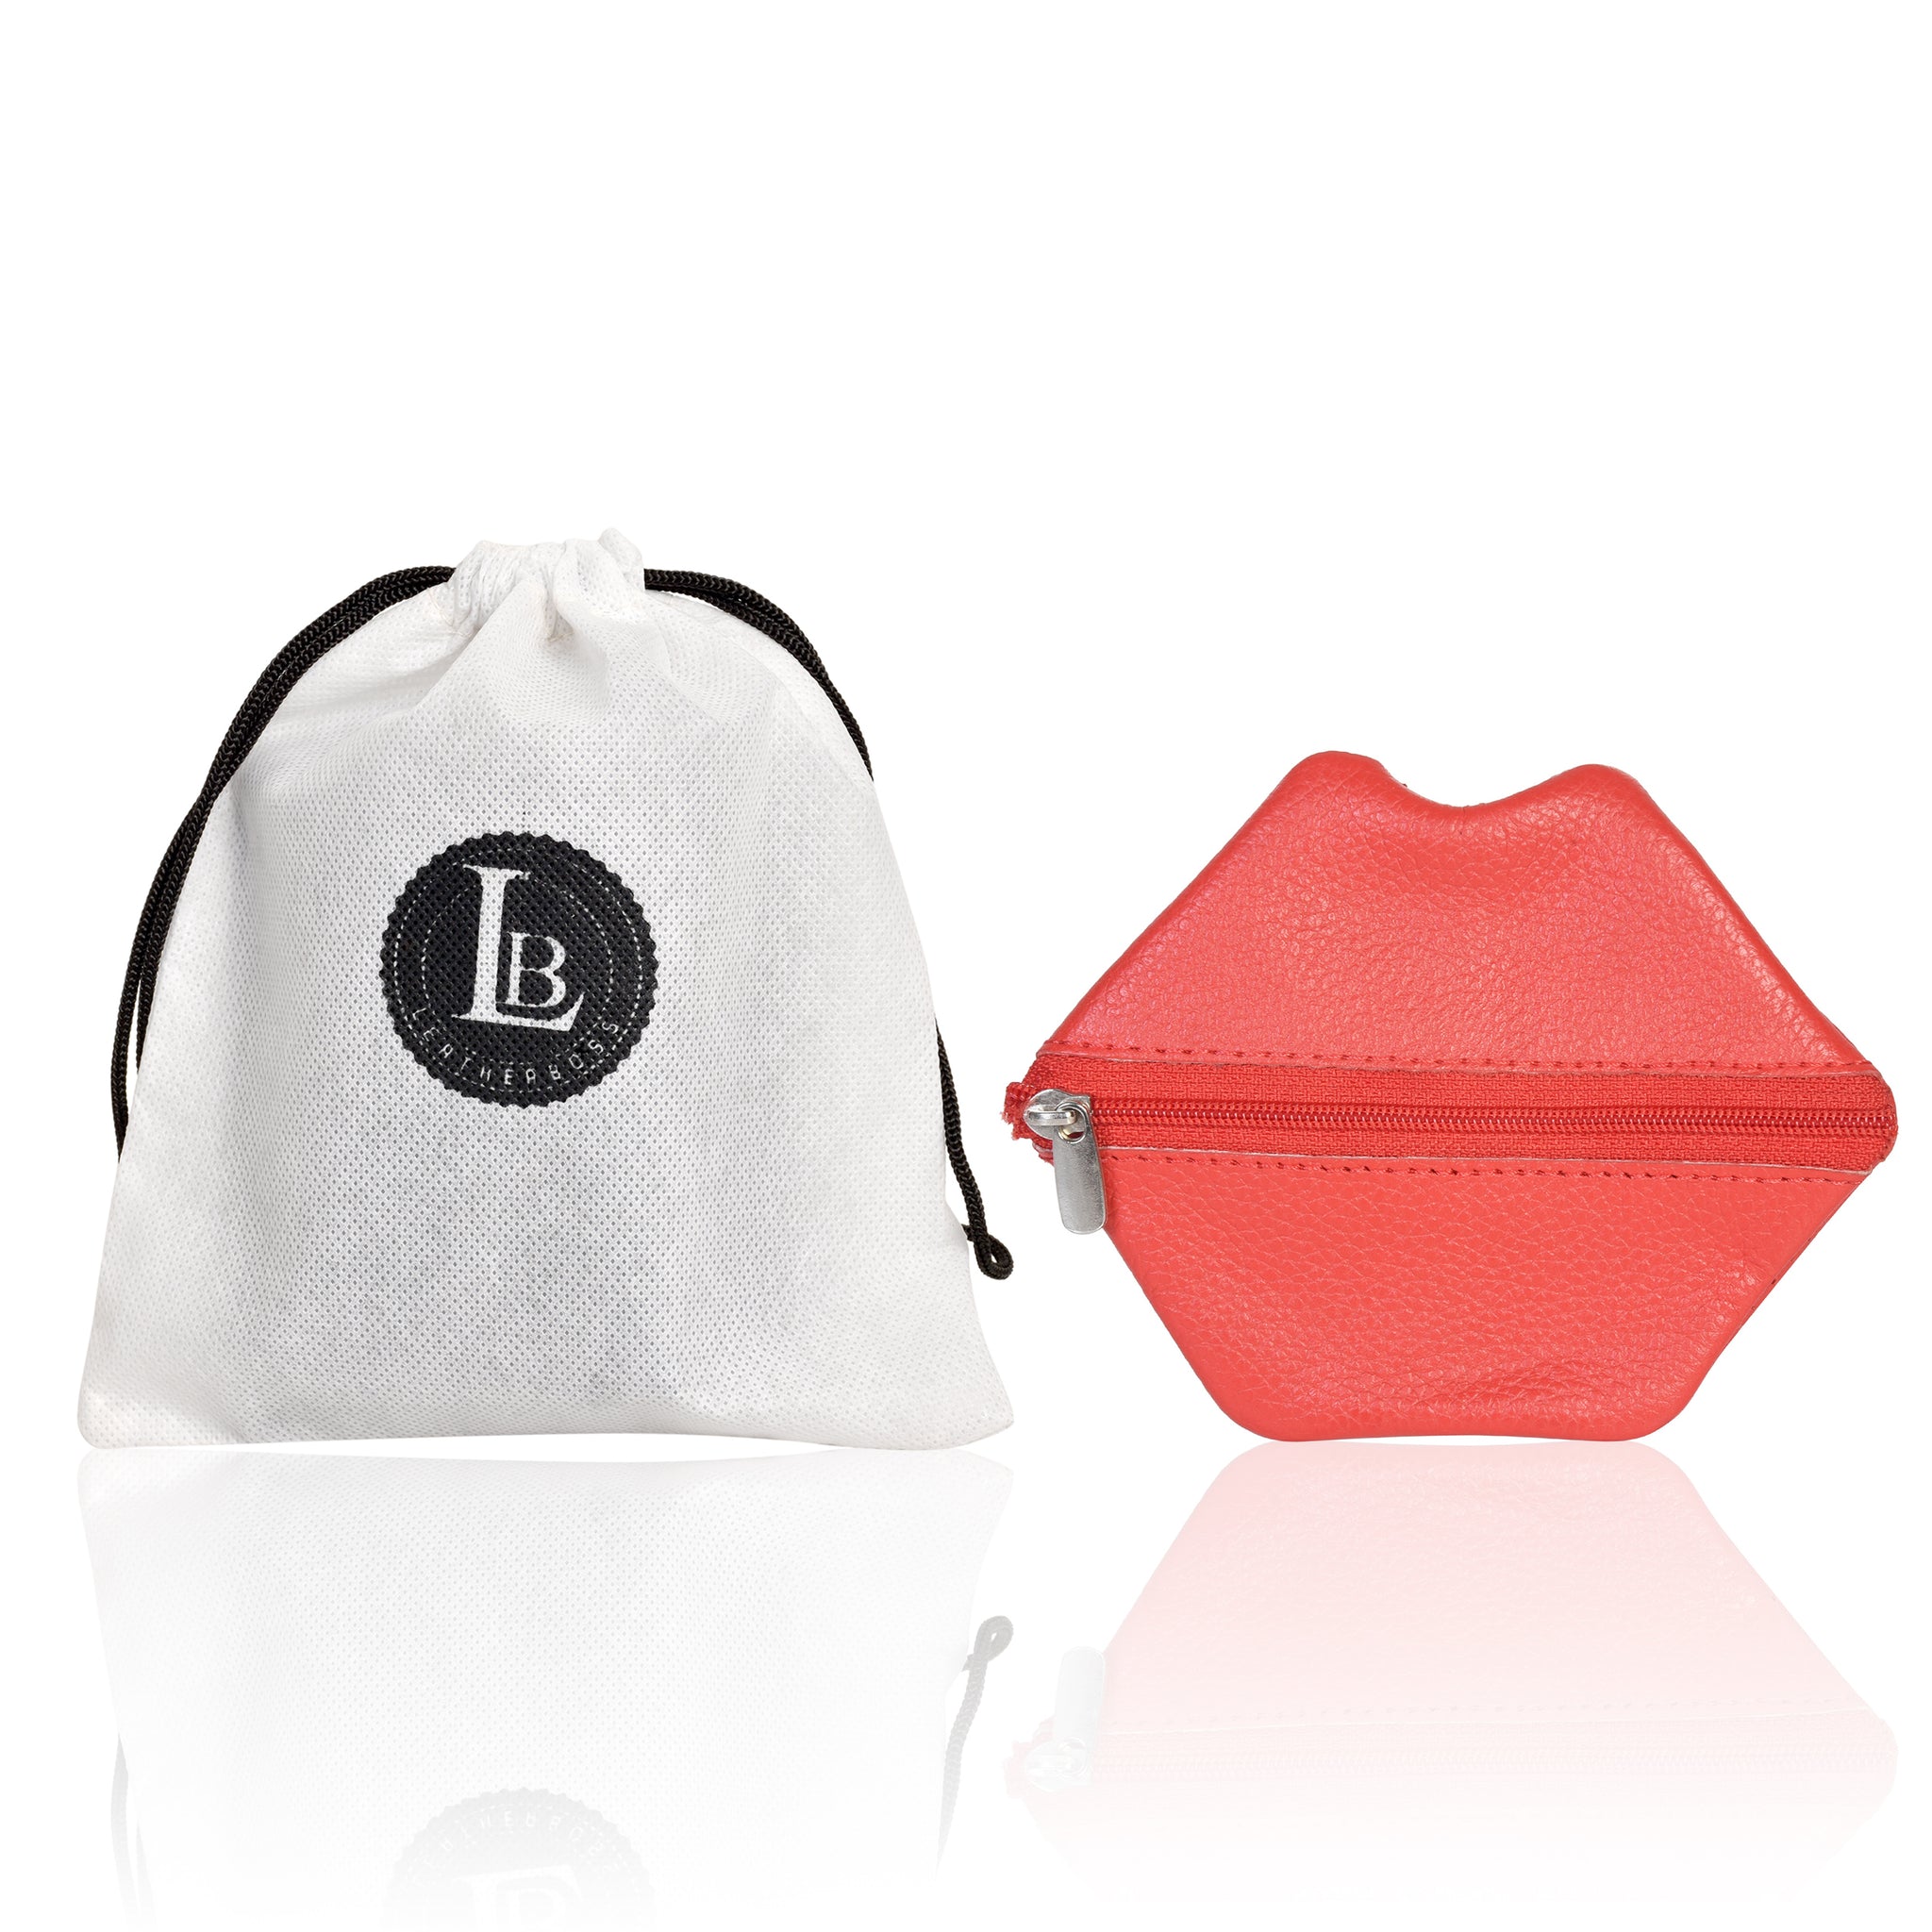 Leatherboss Ladies girls coin purse lipstick key holder - Lips Shape